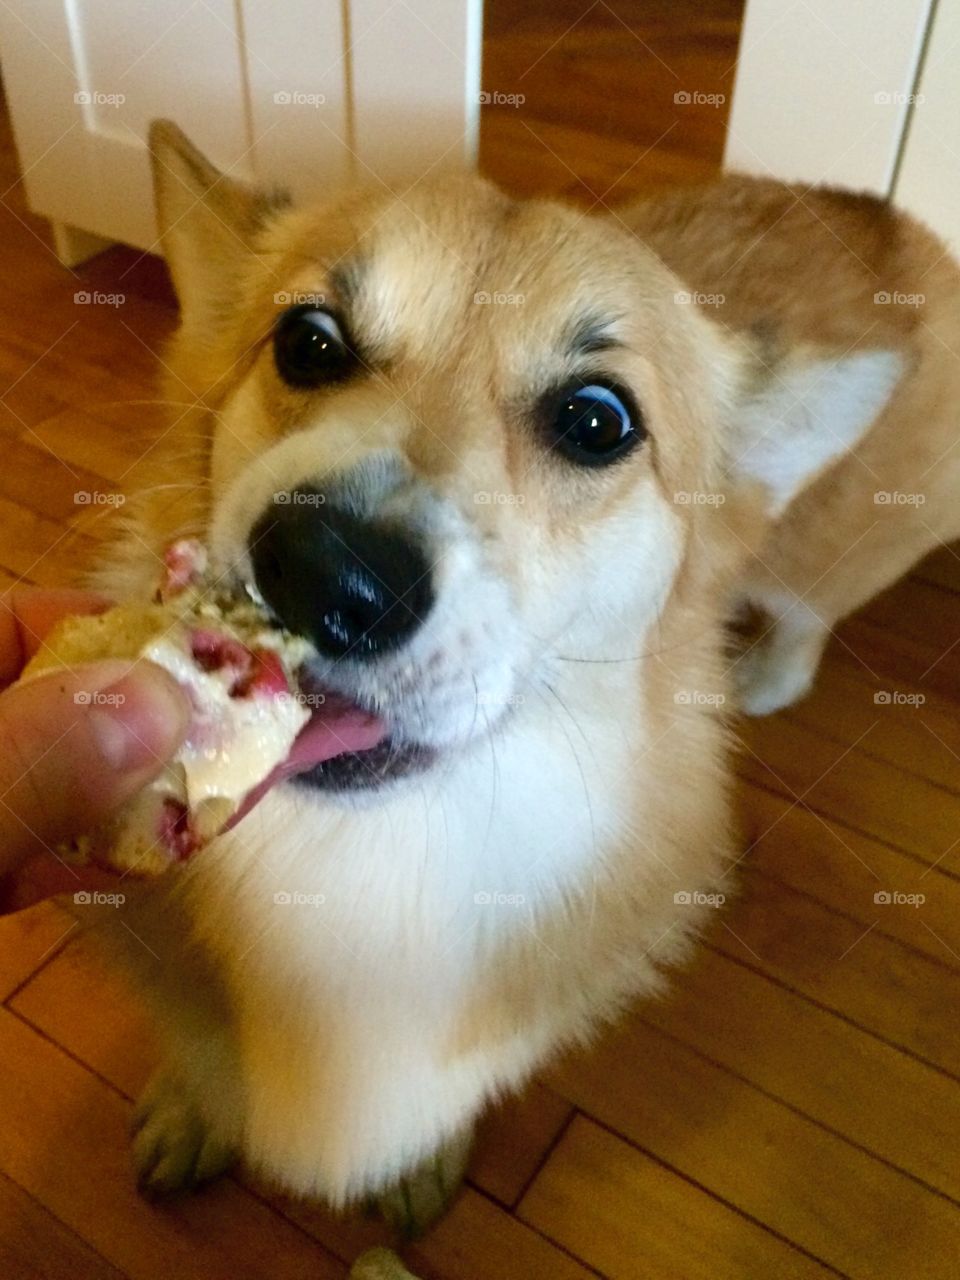 Hungry corgi. Pembroke Welsh Corgi eating a homemade strawberry dog treat